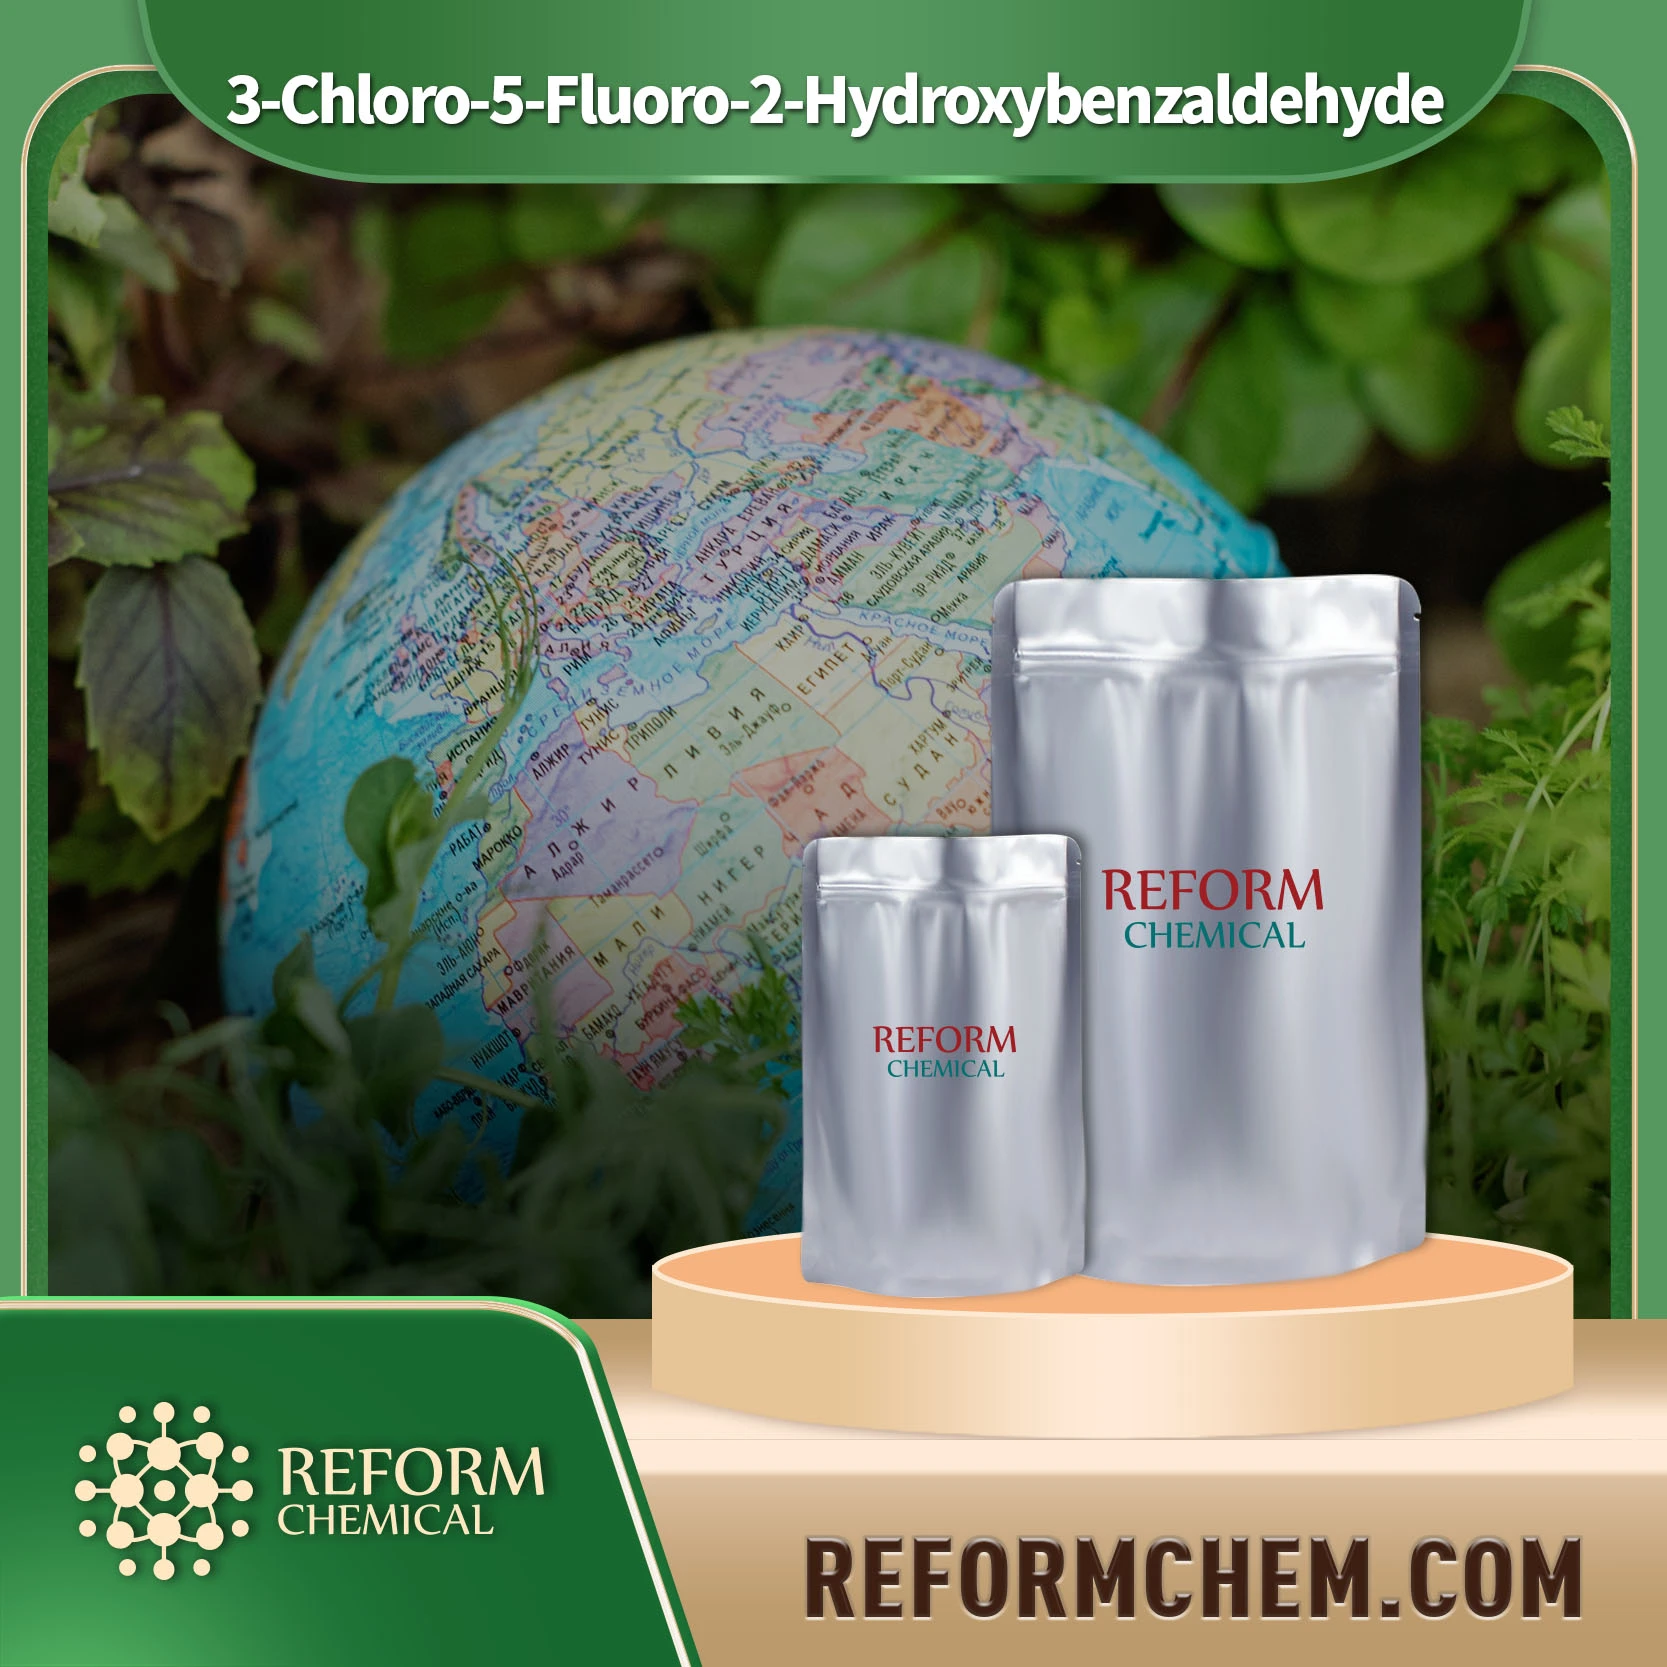 3-Chloro-5-Fluoro-2-Hydroxybenzaldehyde